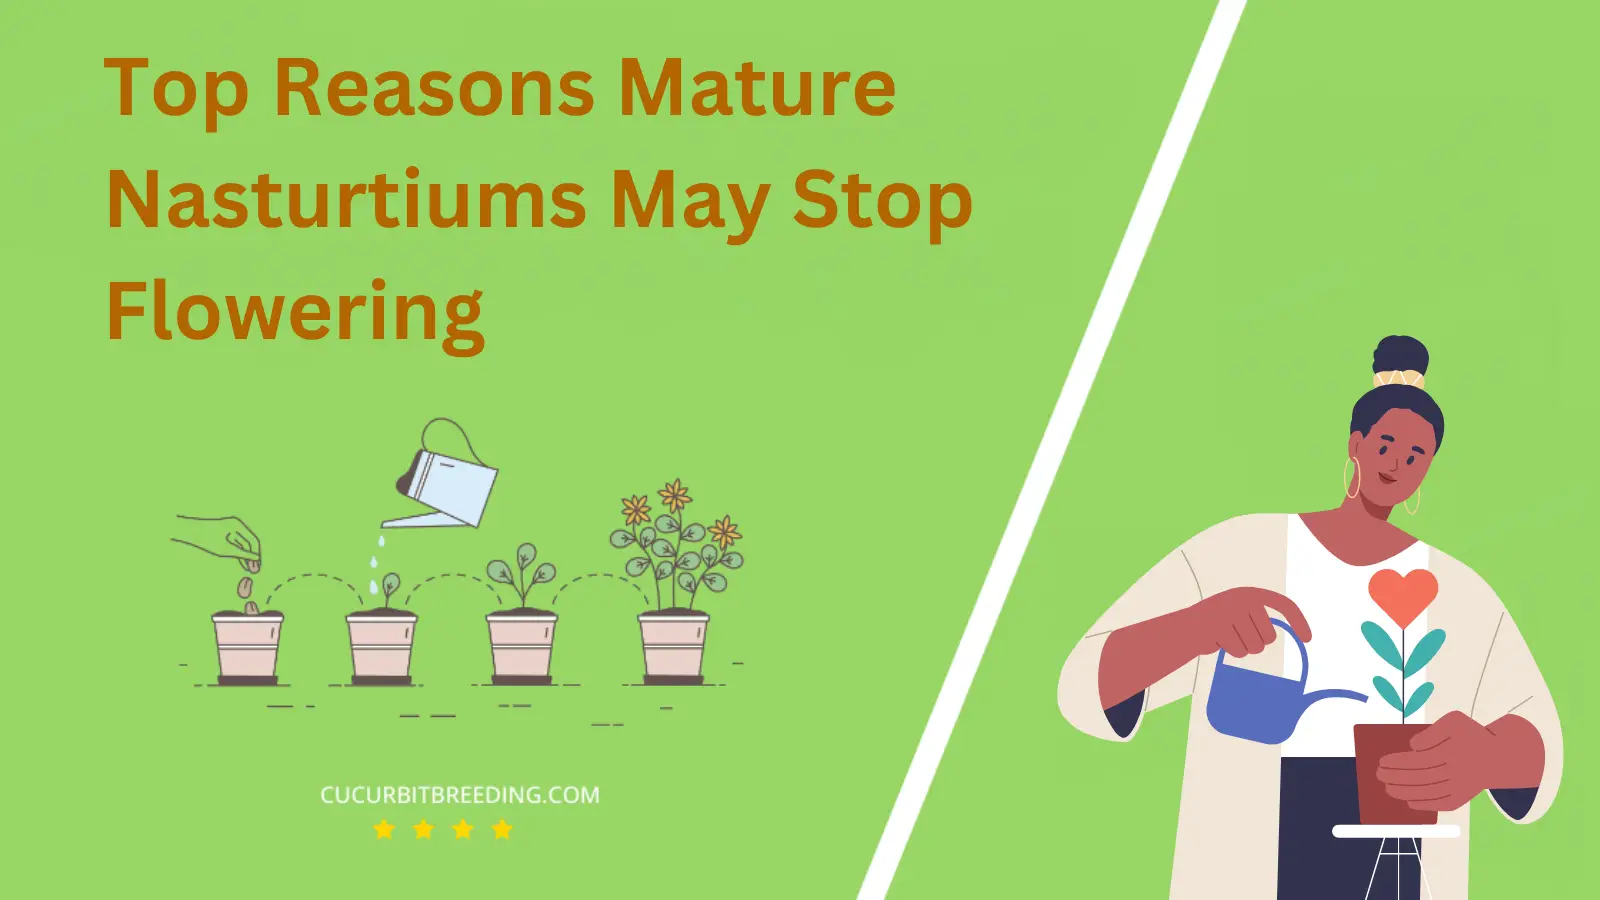 Top Reasons Mature Nasturtiums May Stop Flowering